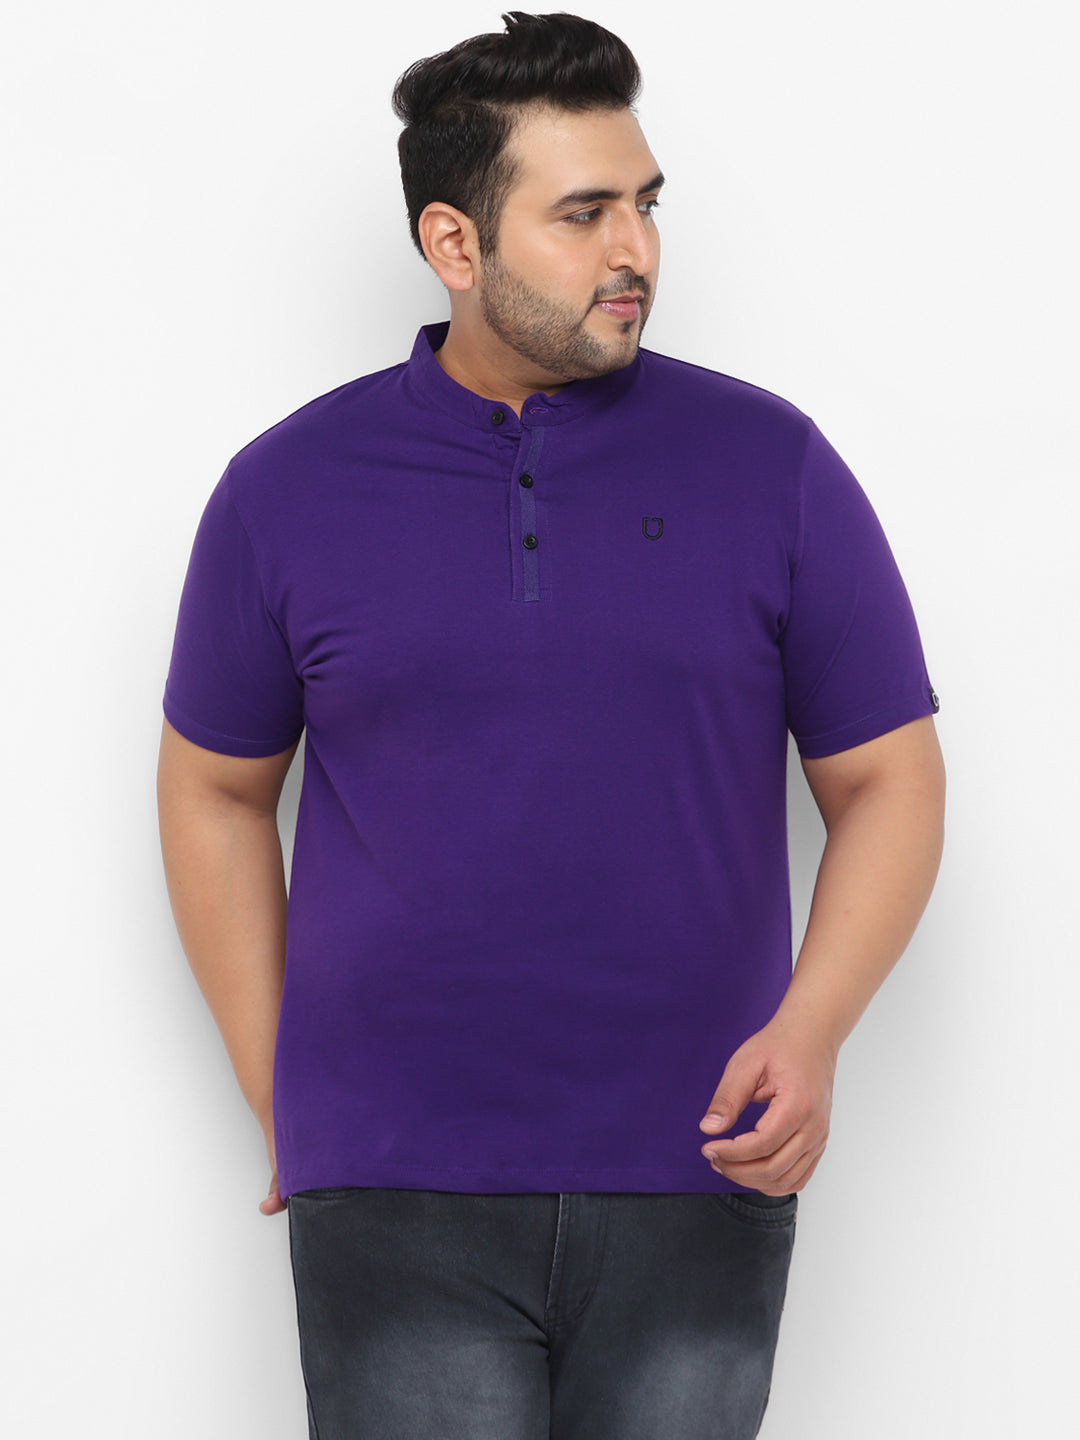 Men's Purple Solid Mandarin Collar Regular Fit Cotton T-Shirt